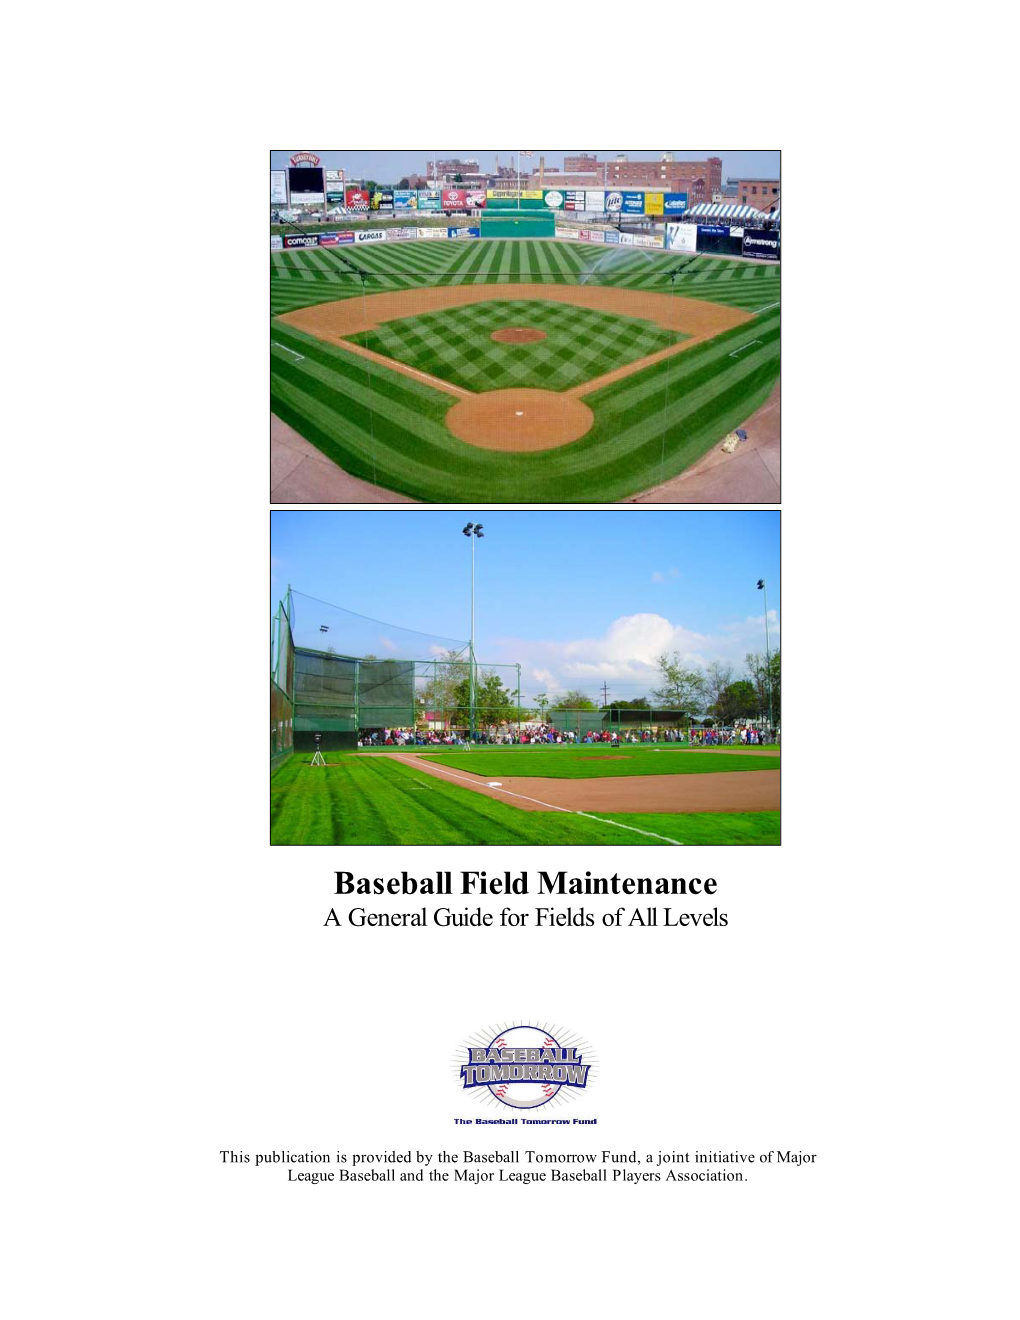 Baseball Field Maintenance Guide